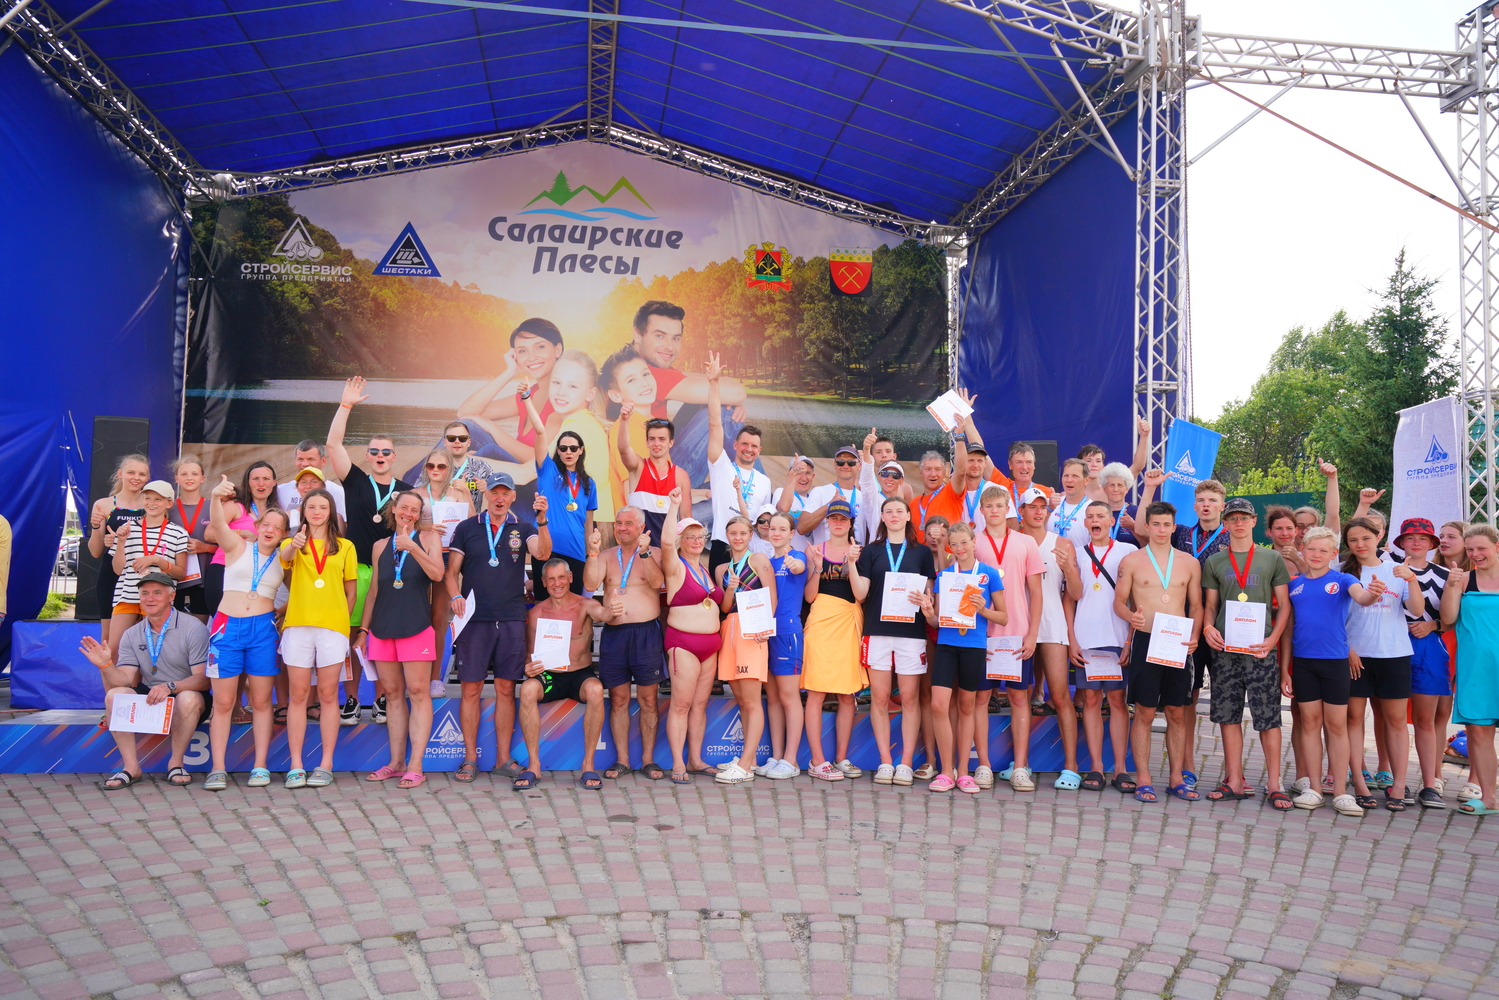 160 пловцов со всей России боролись за призы Стройсервиса на Шахтерской миле. Стройсервис